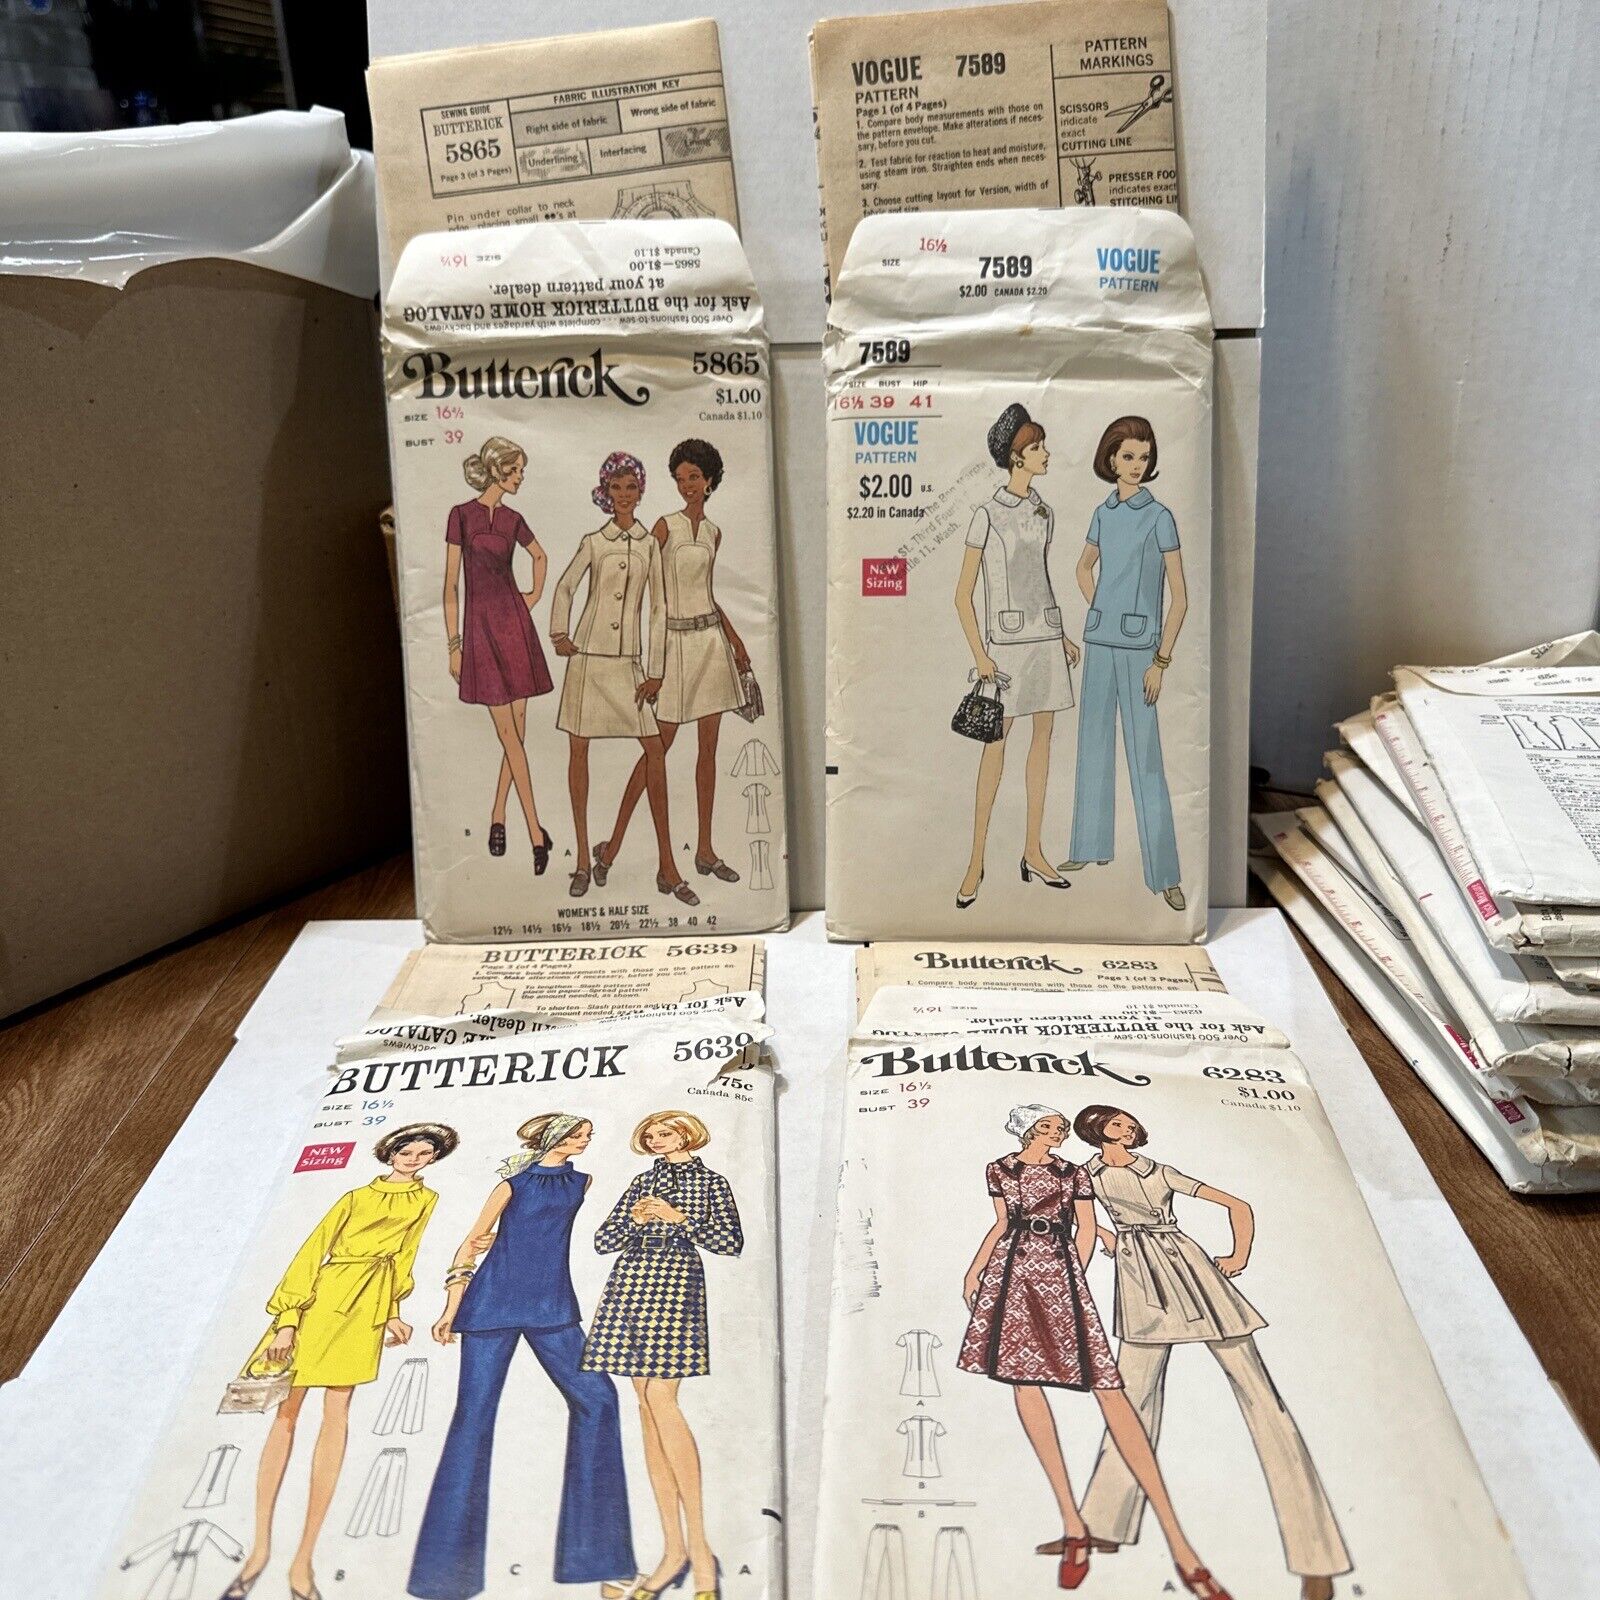 Set 4: 197O’s Vintage Sewing Patterns Women’s (1) Vogue & Butterick, Size 16 1/2